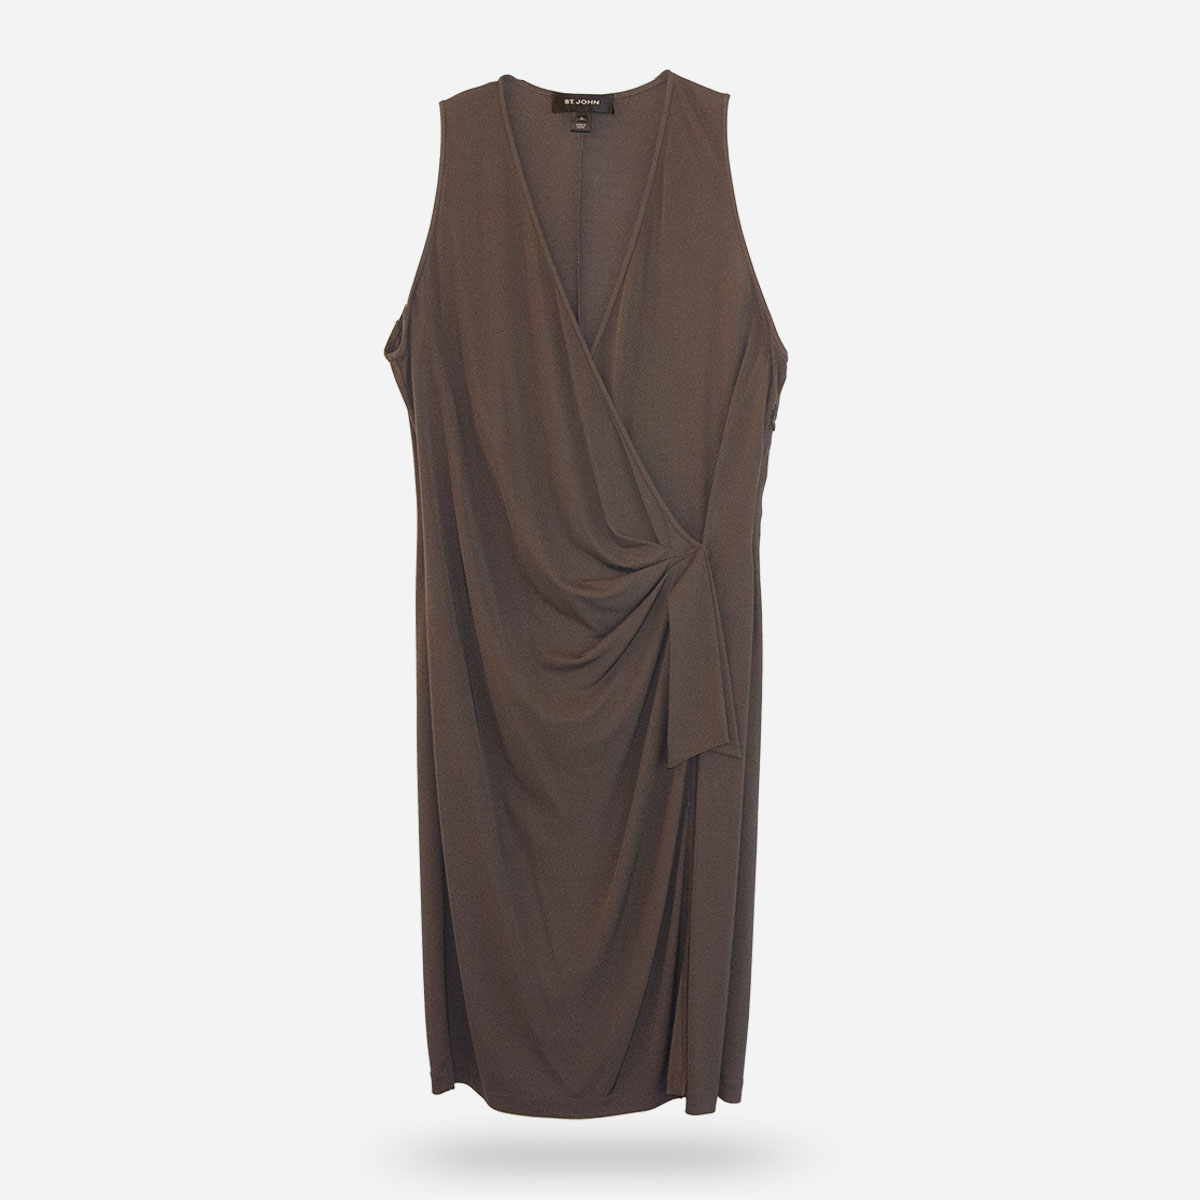 Vintage st. johns dress, brown wrap dress